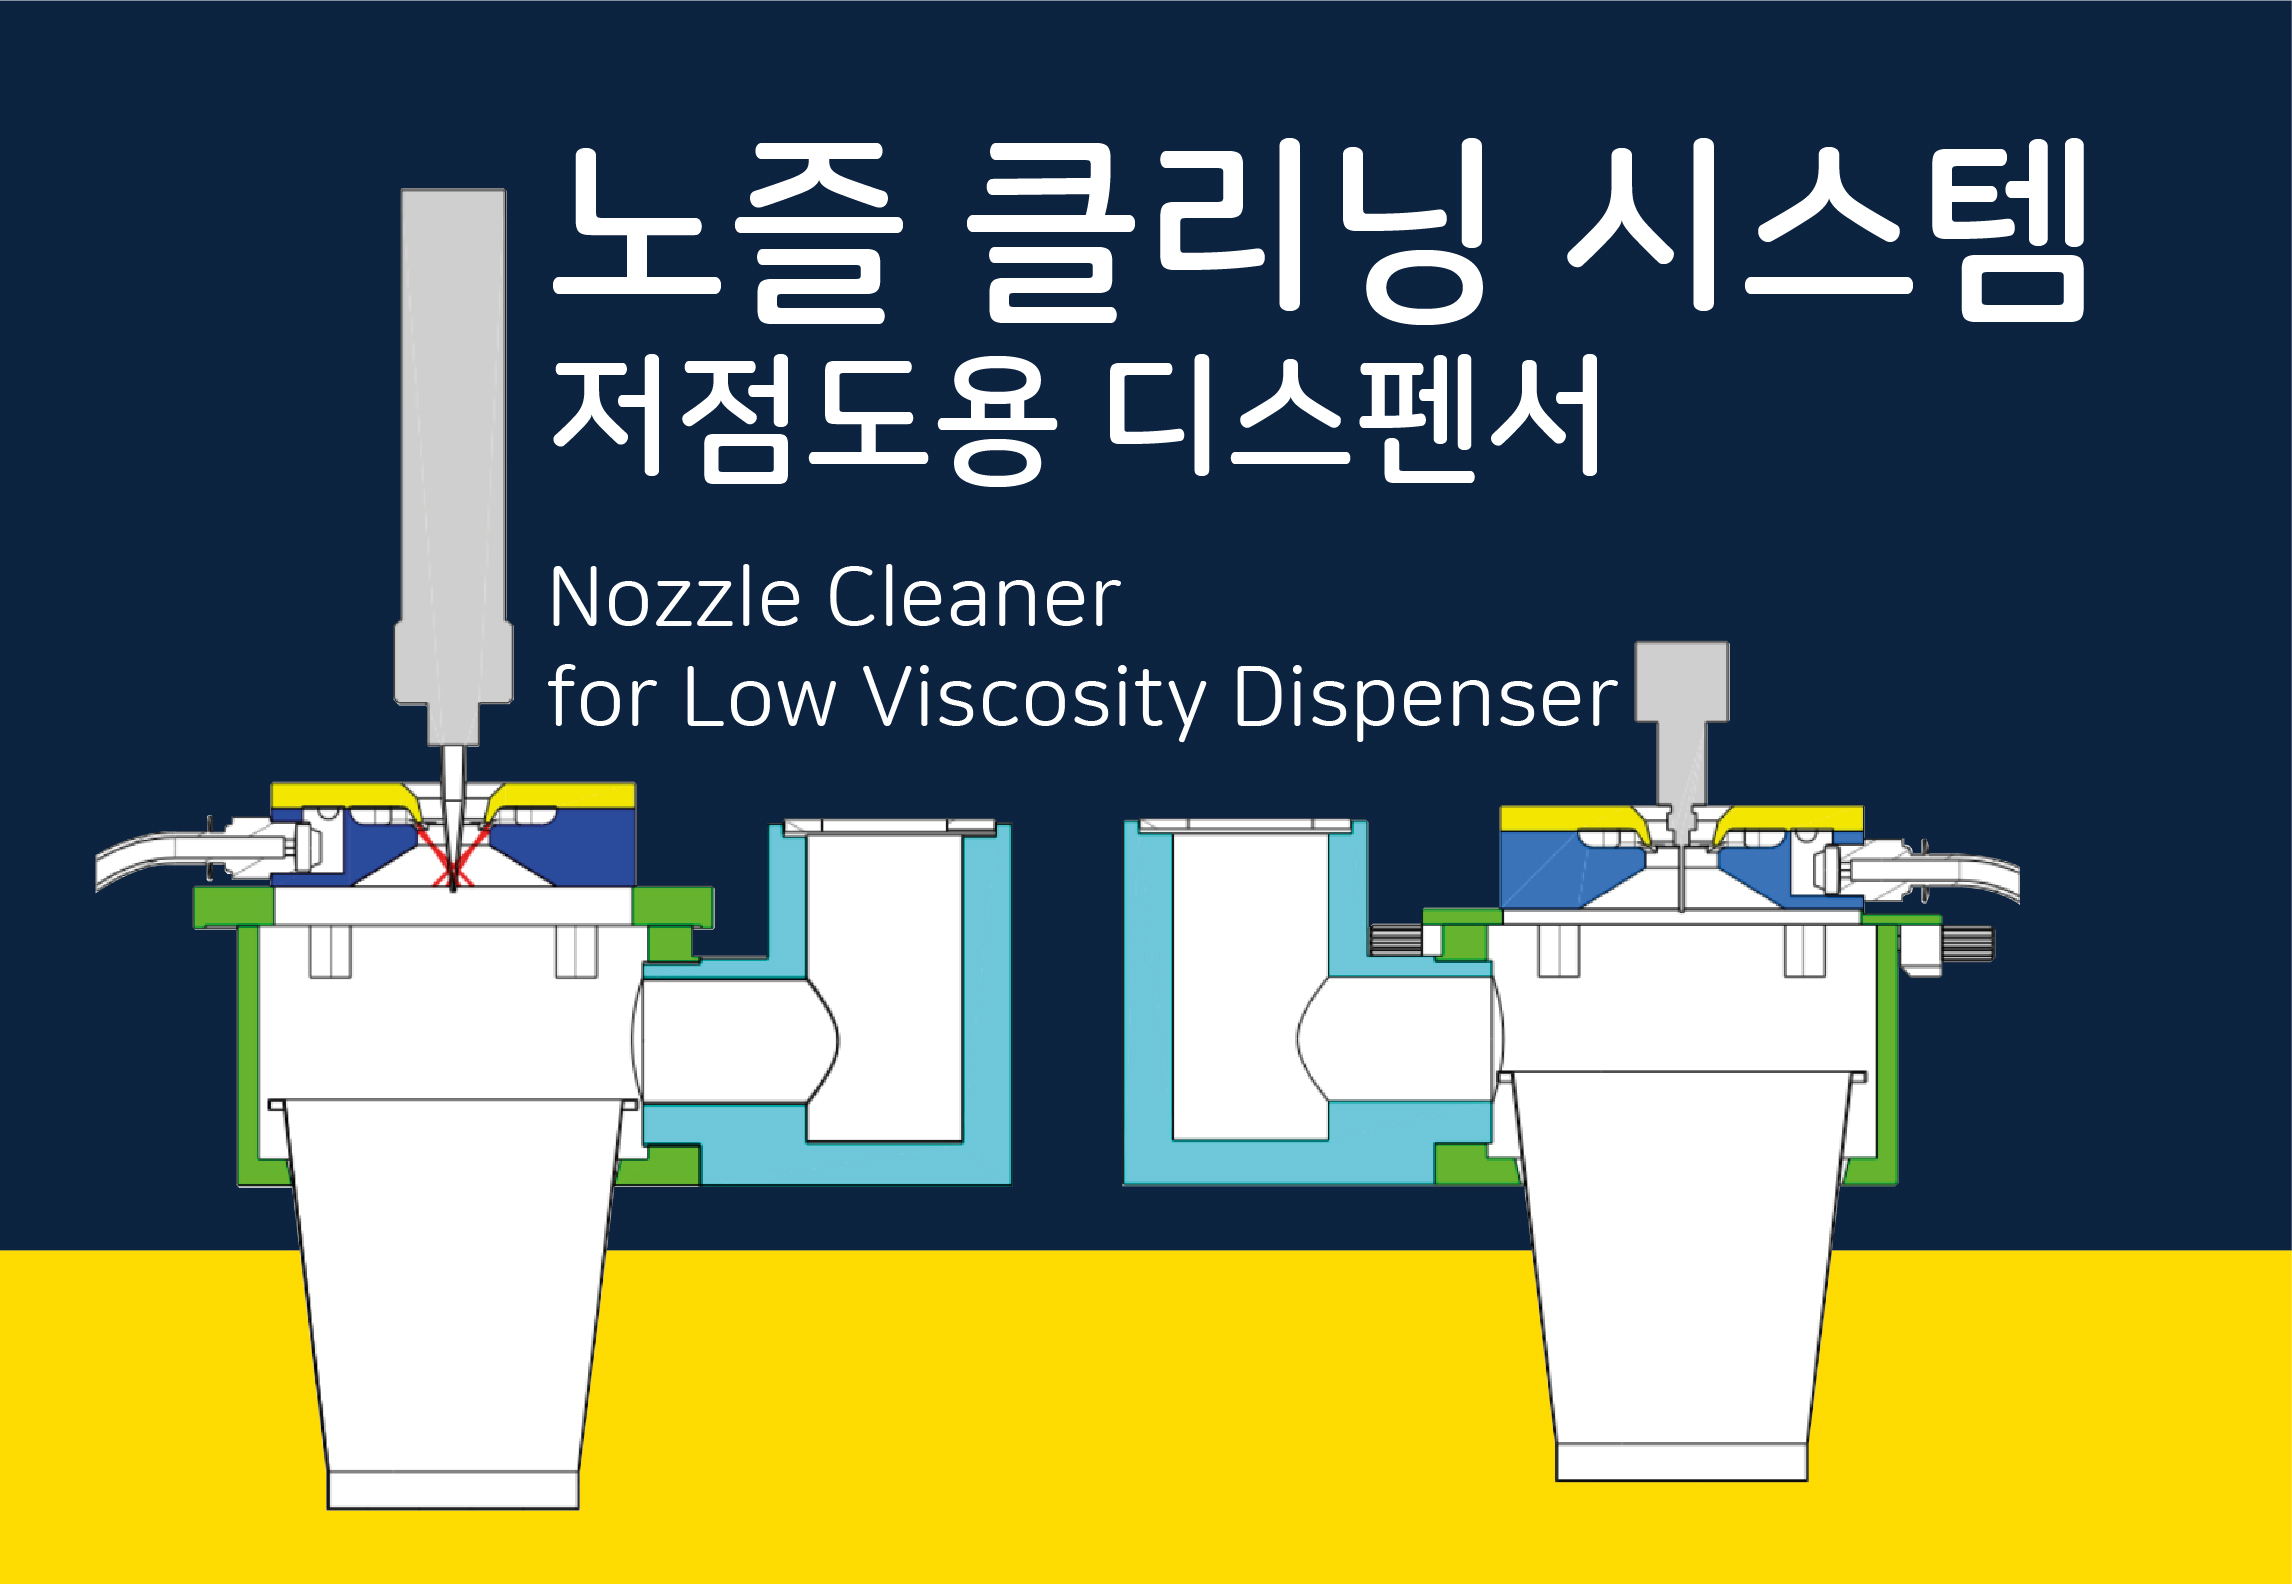 Nozzle Cleaner